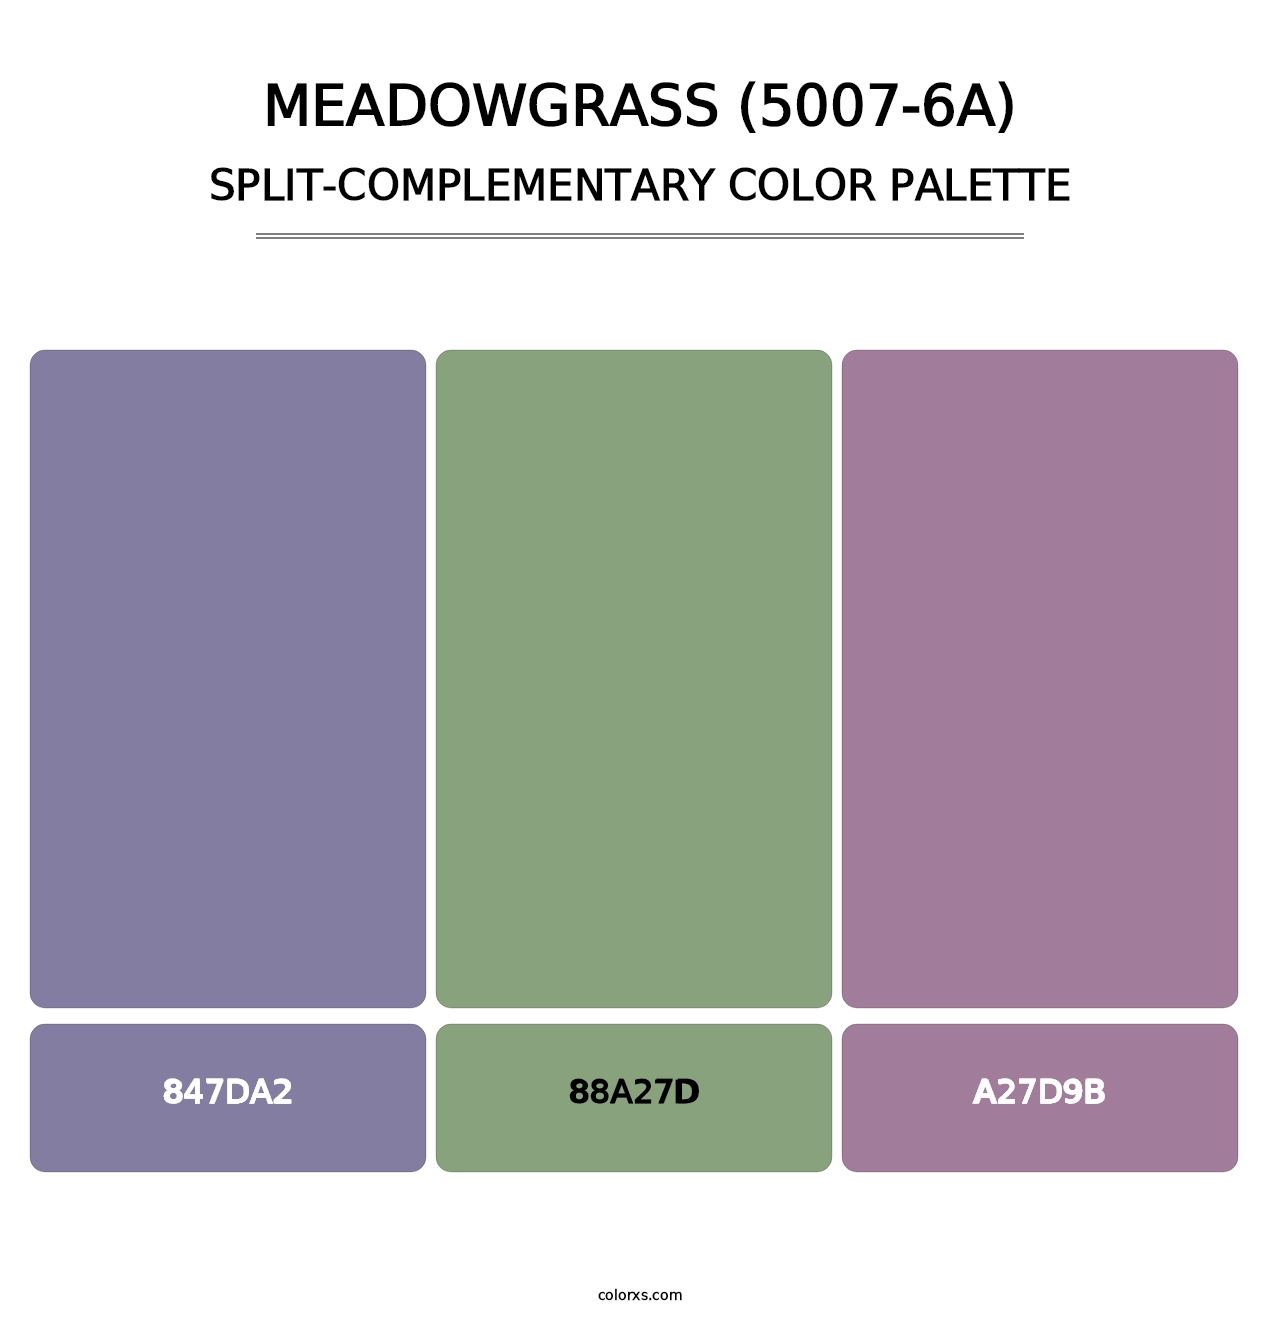 Meadowgrass (5007-6A) - Split-Complementary Color Palette